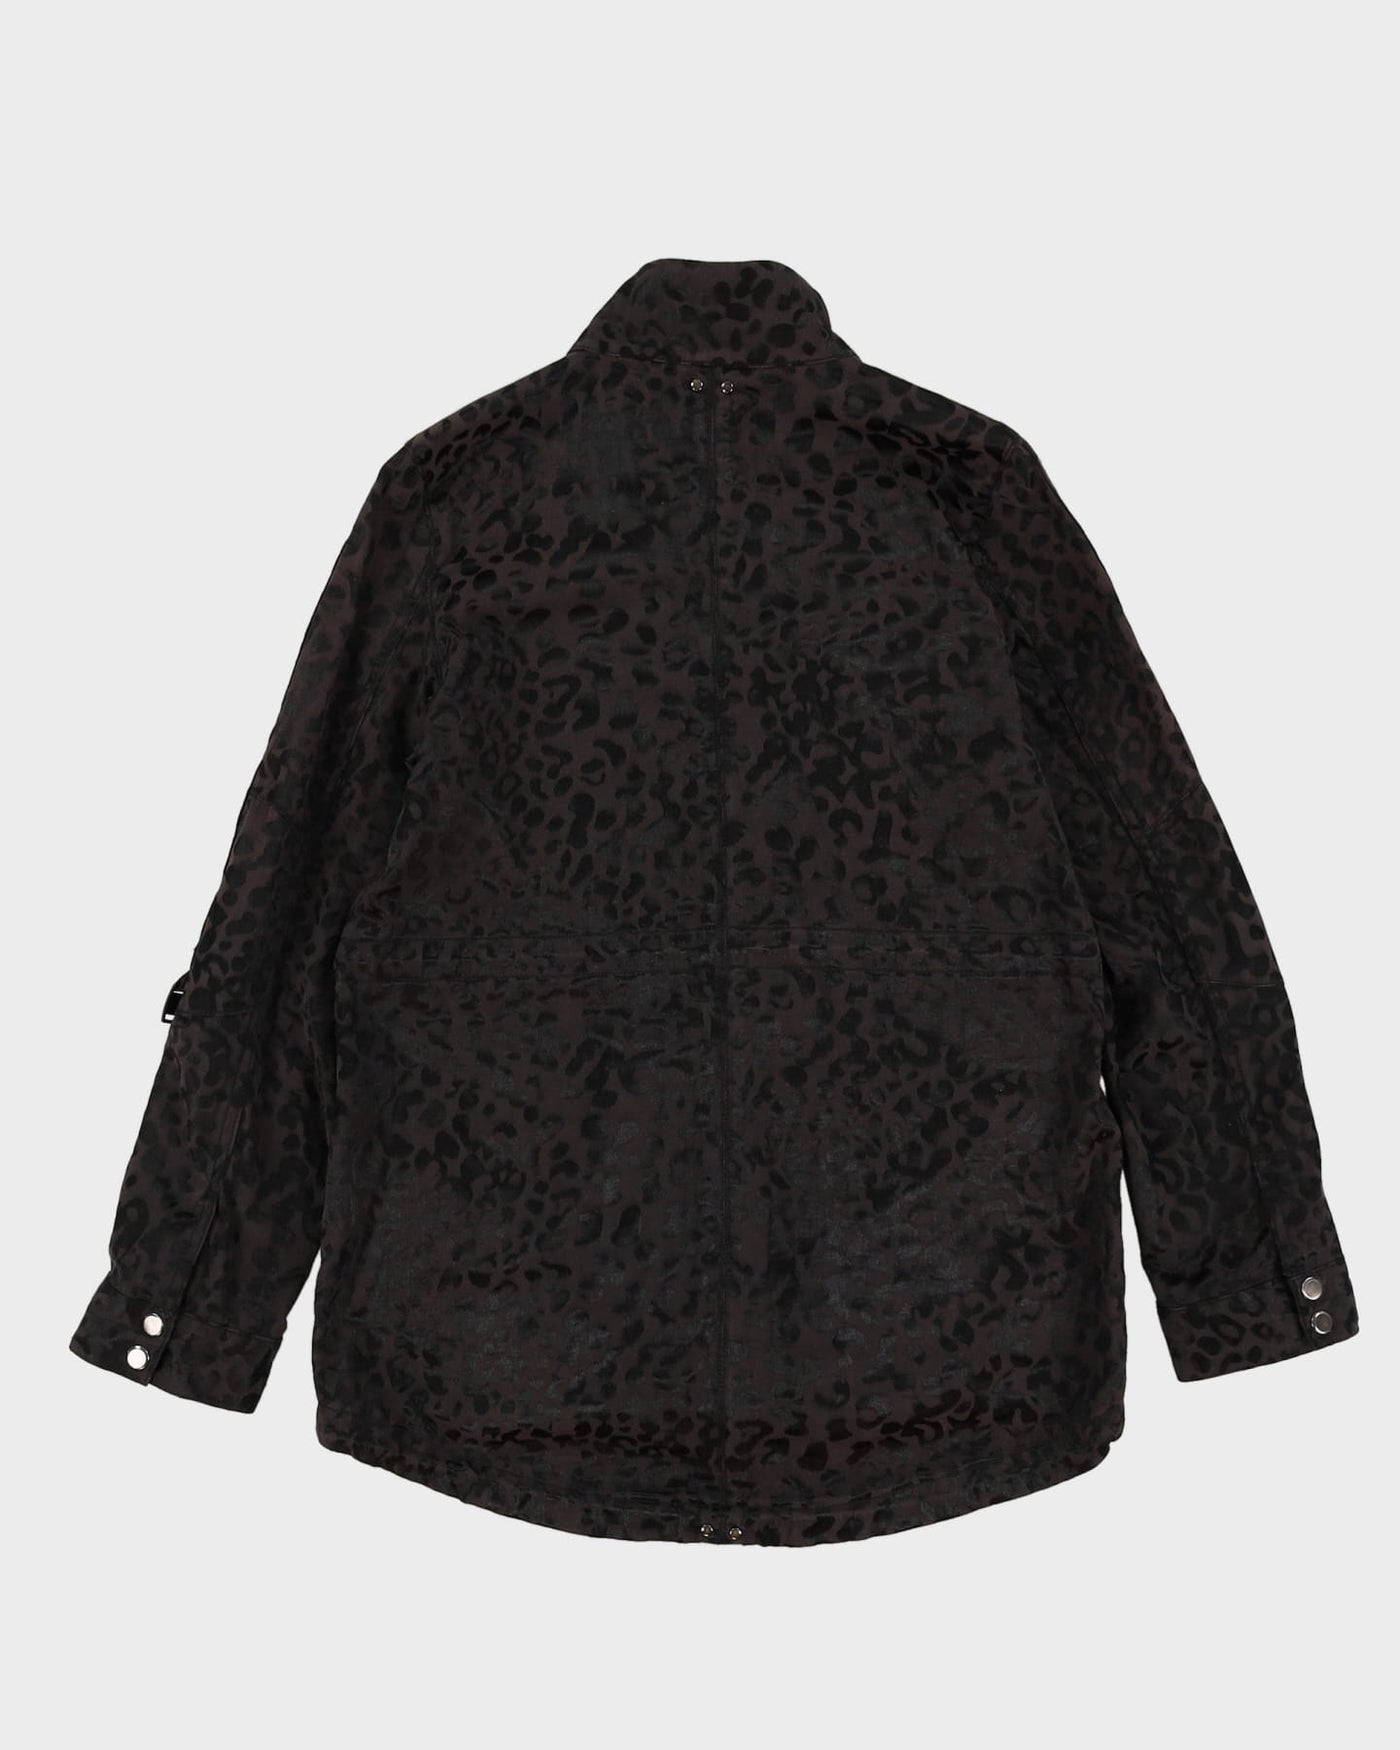 Calvin Klein Black Patterned Jacket - XS